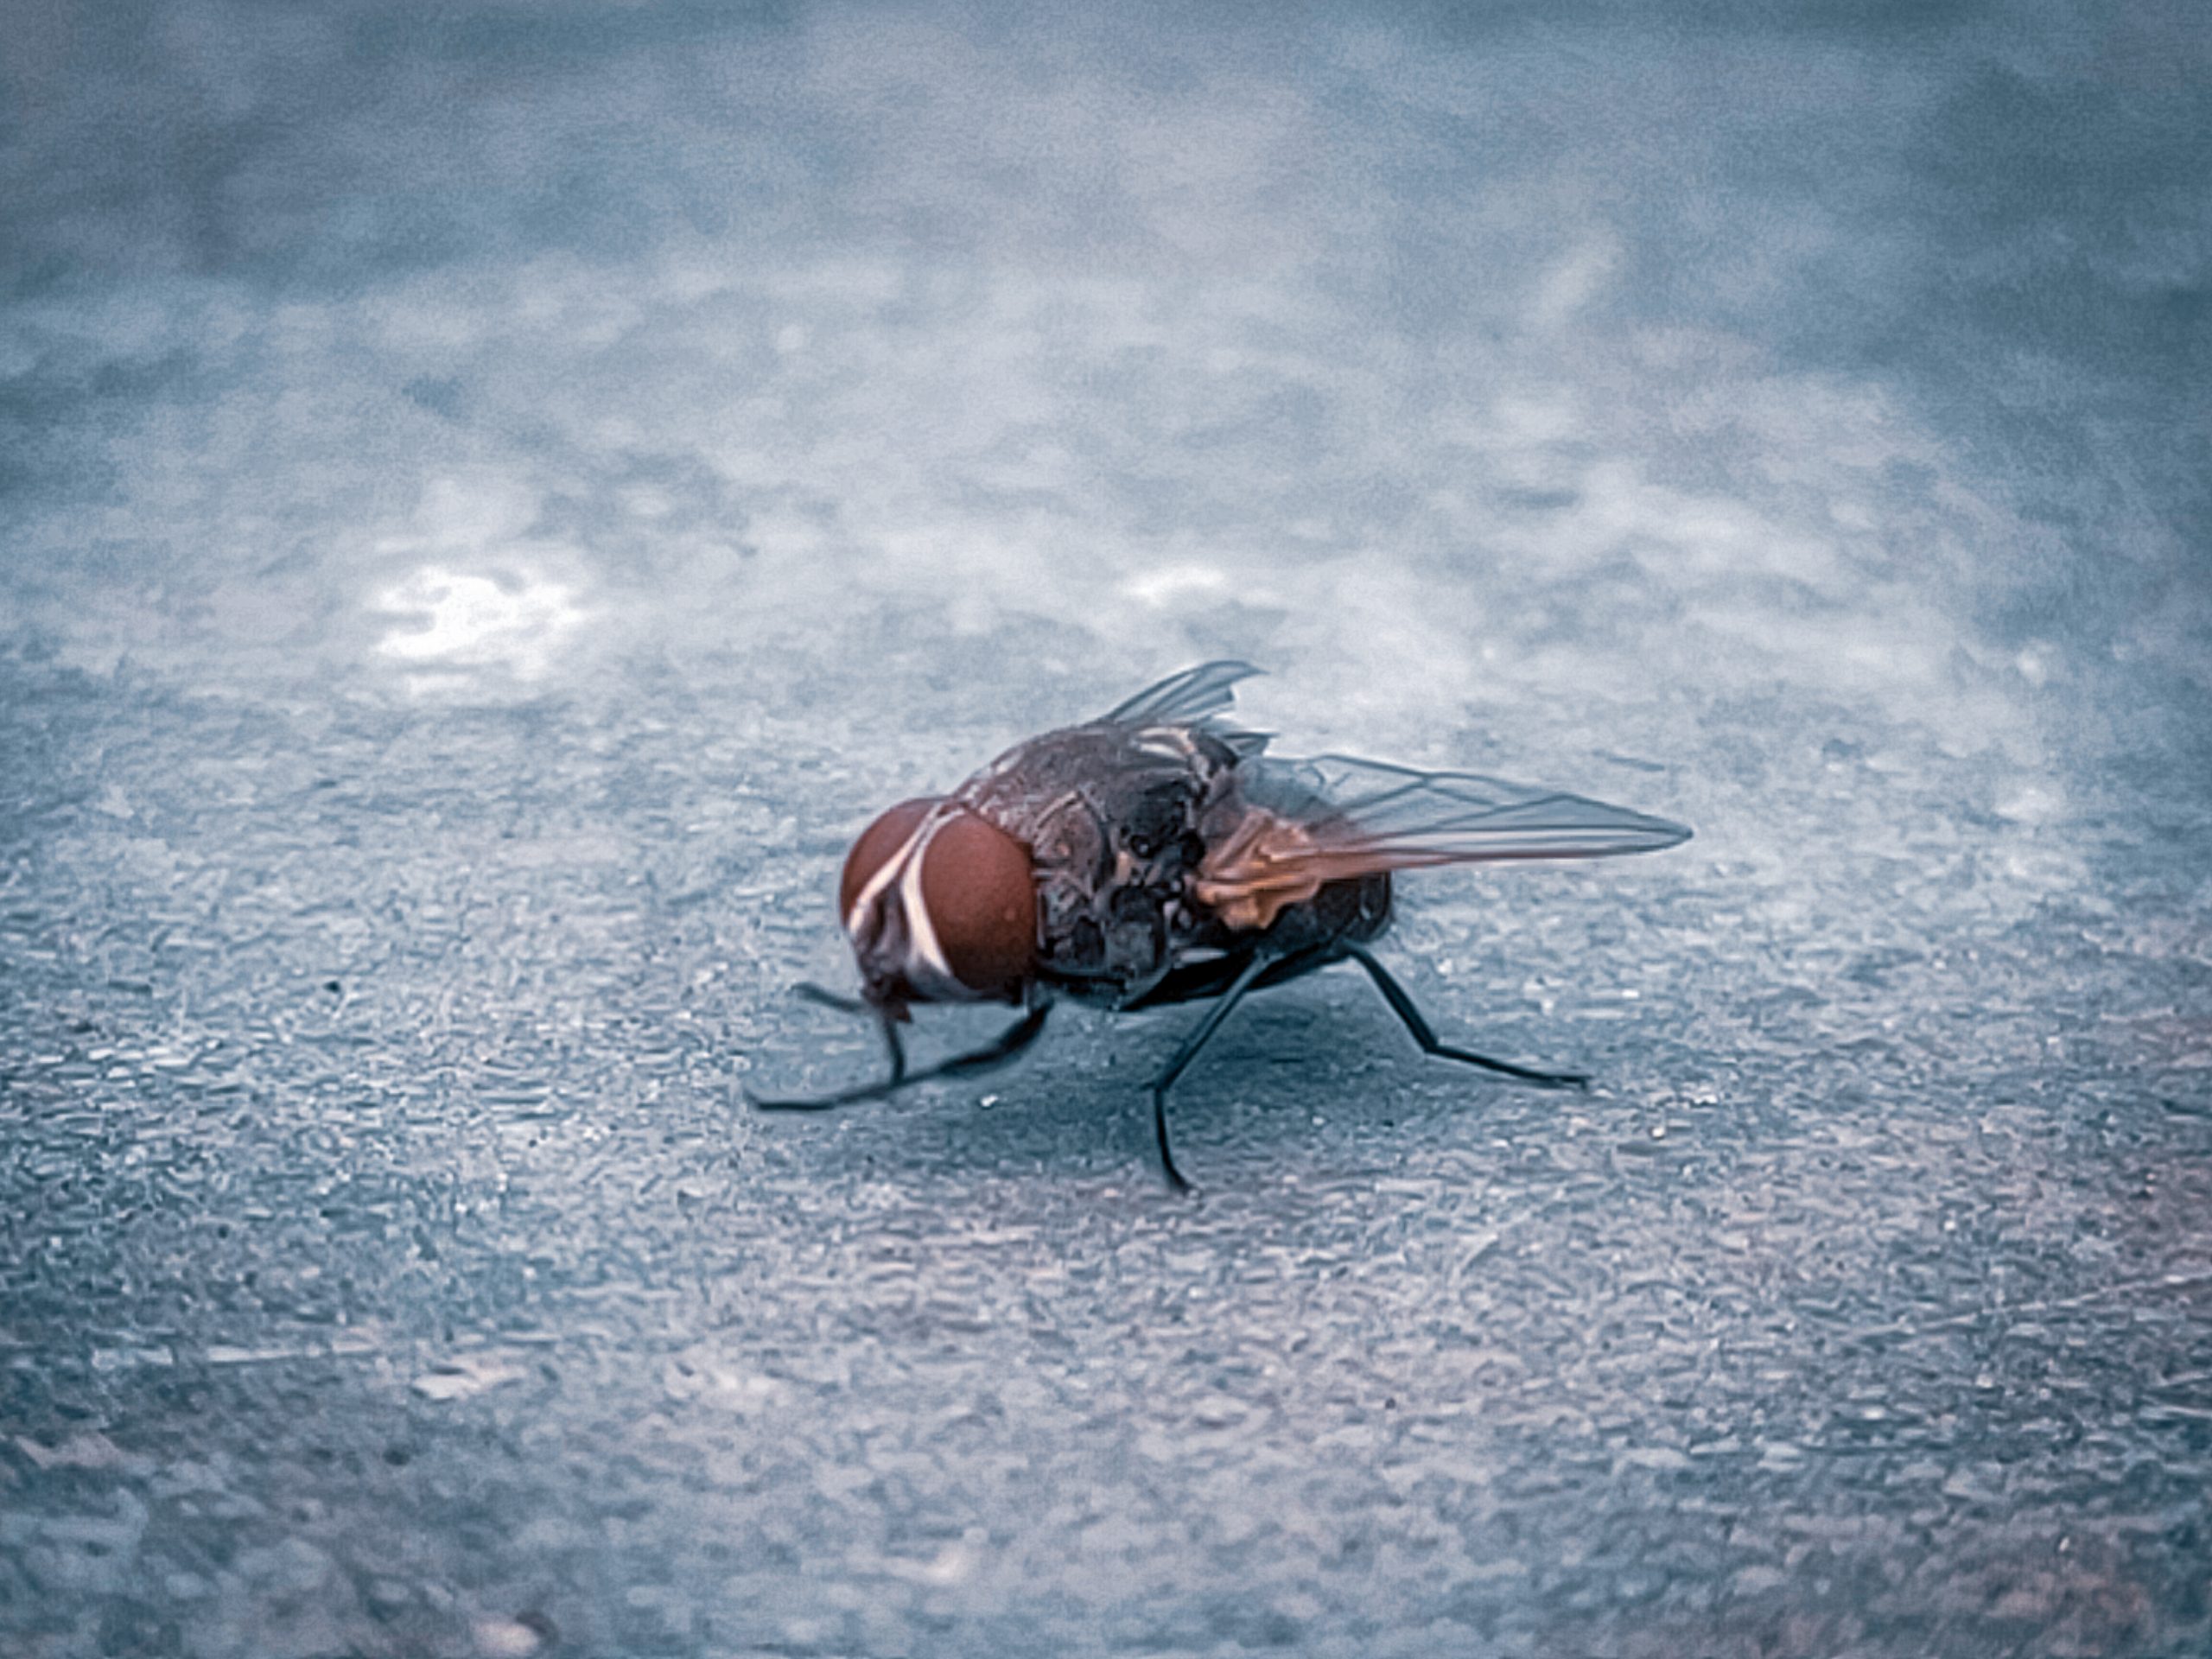 A housefly